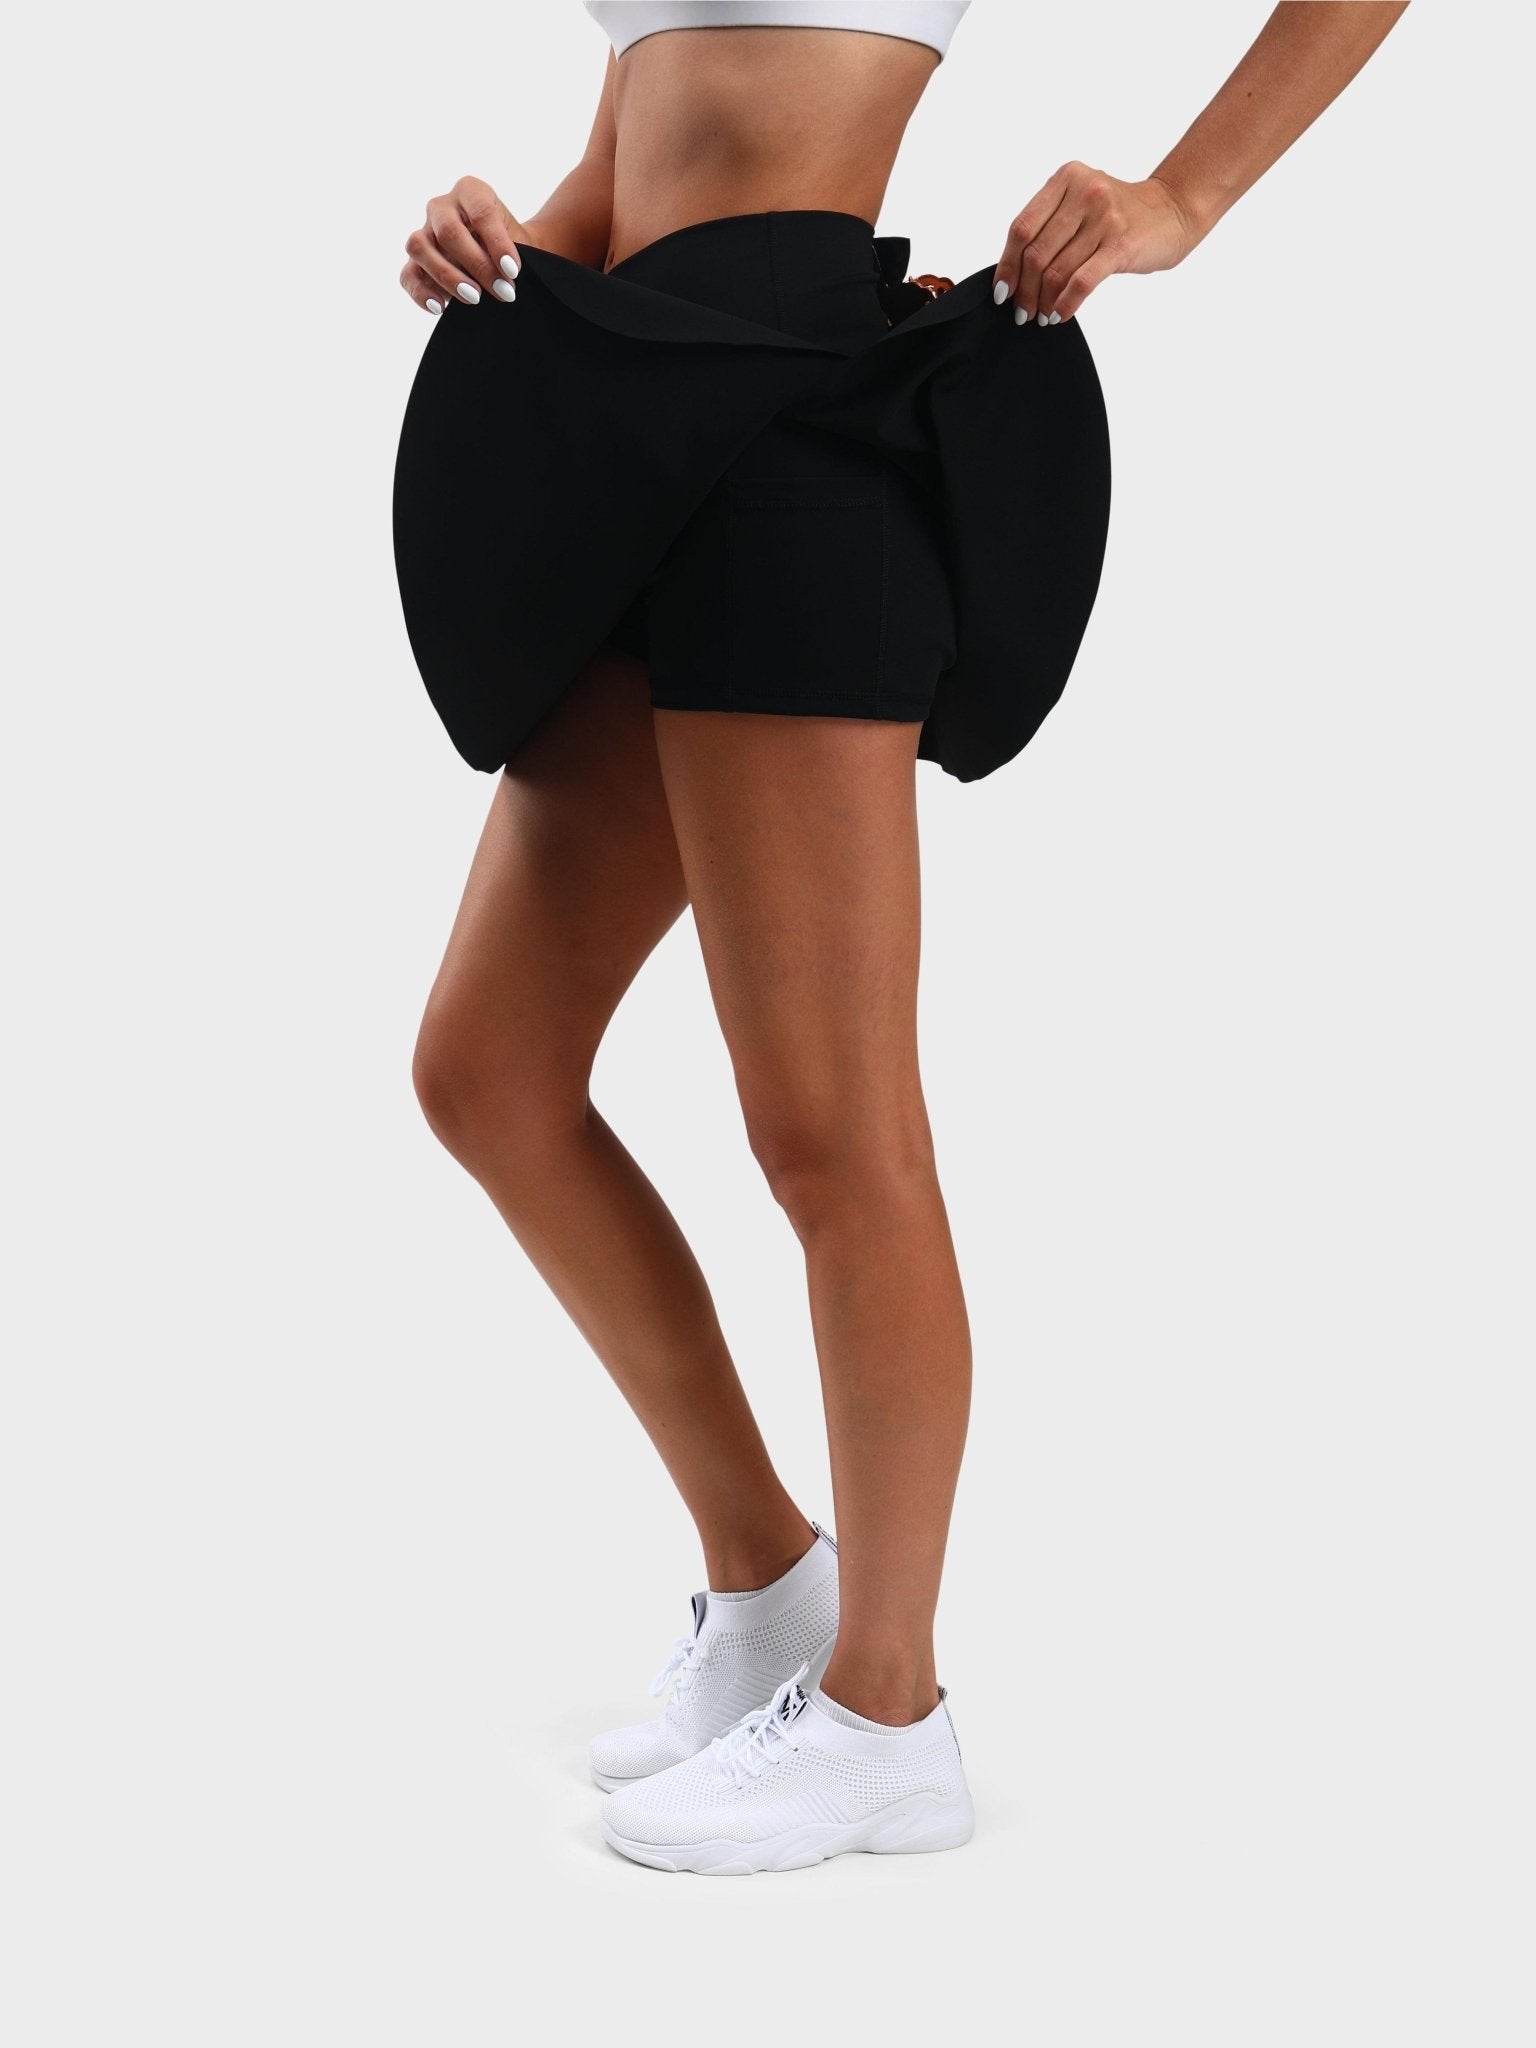 Momentum Black Skirt Shorts - MIOFAR